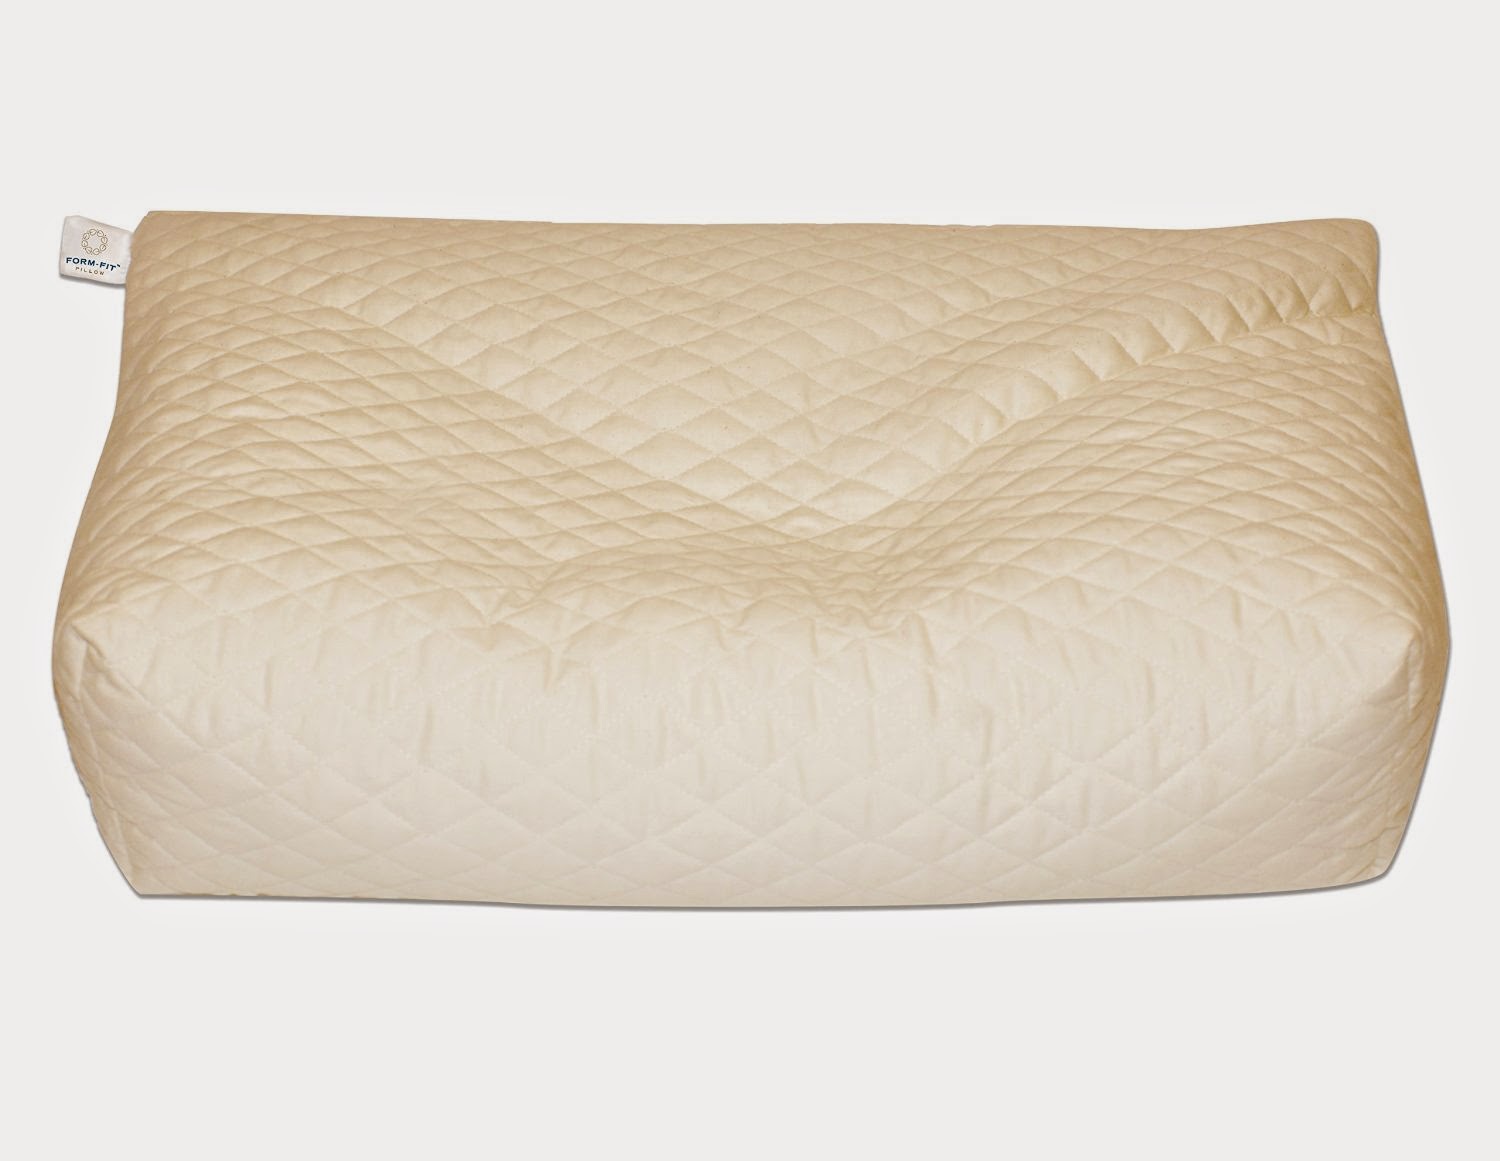 Form-Fit pillow